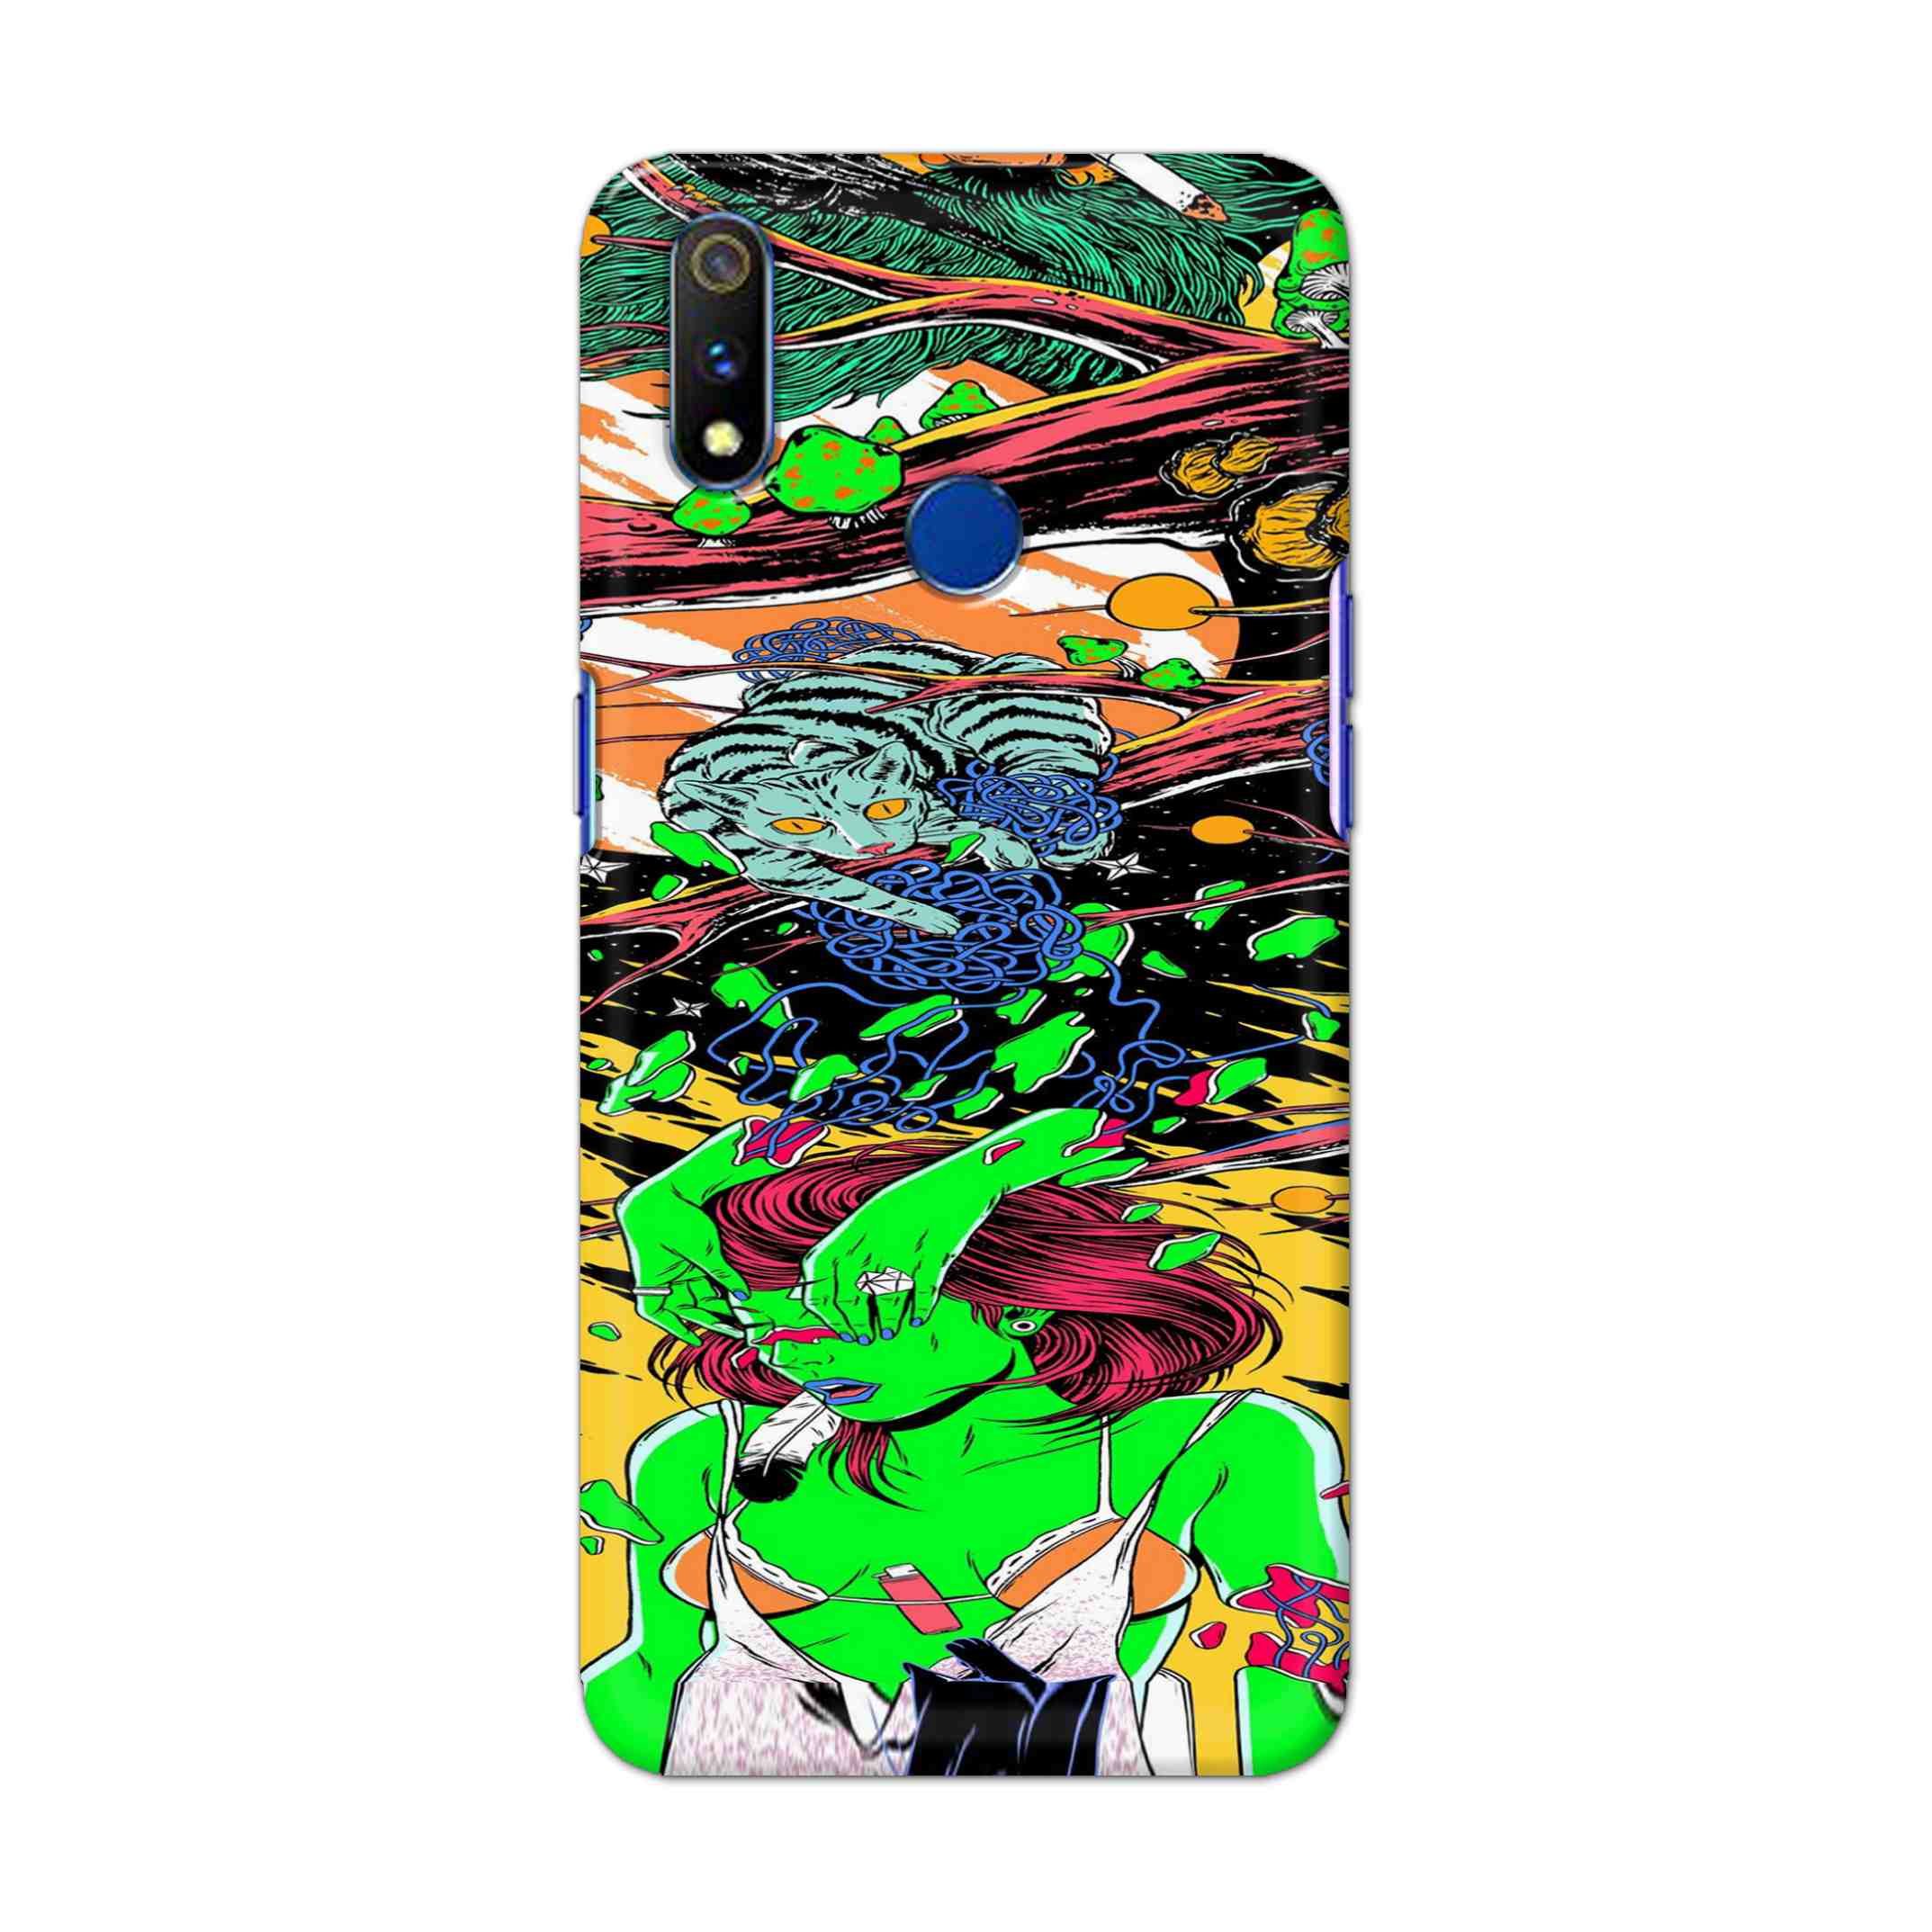 Buy Green Girl Art Hard Back Mobile Phone Case Cover For Realme 3 Pro Online